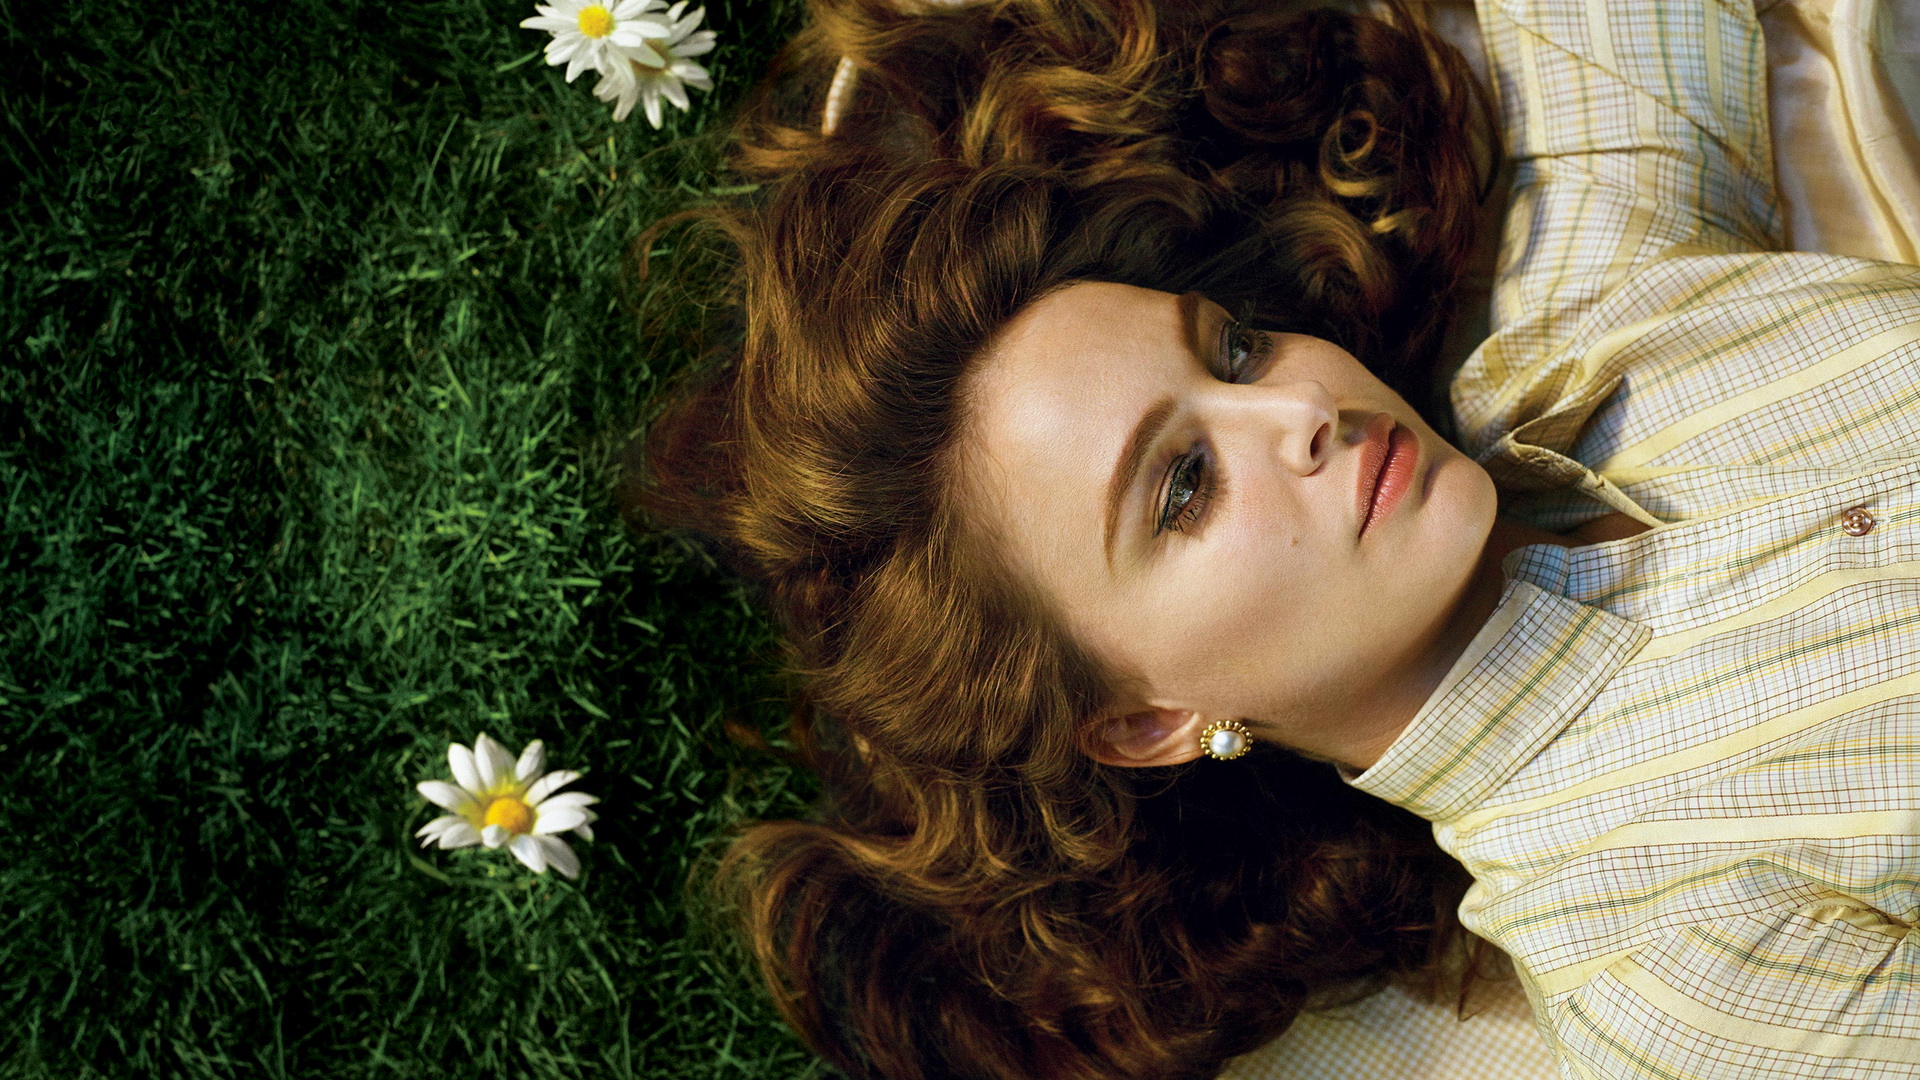 Wallpaper Natalie Portman, daisy flowers, lying down